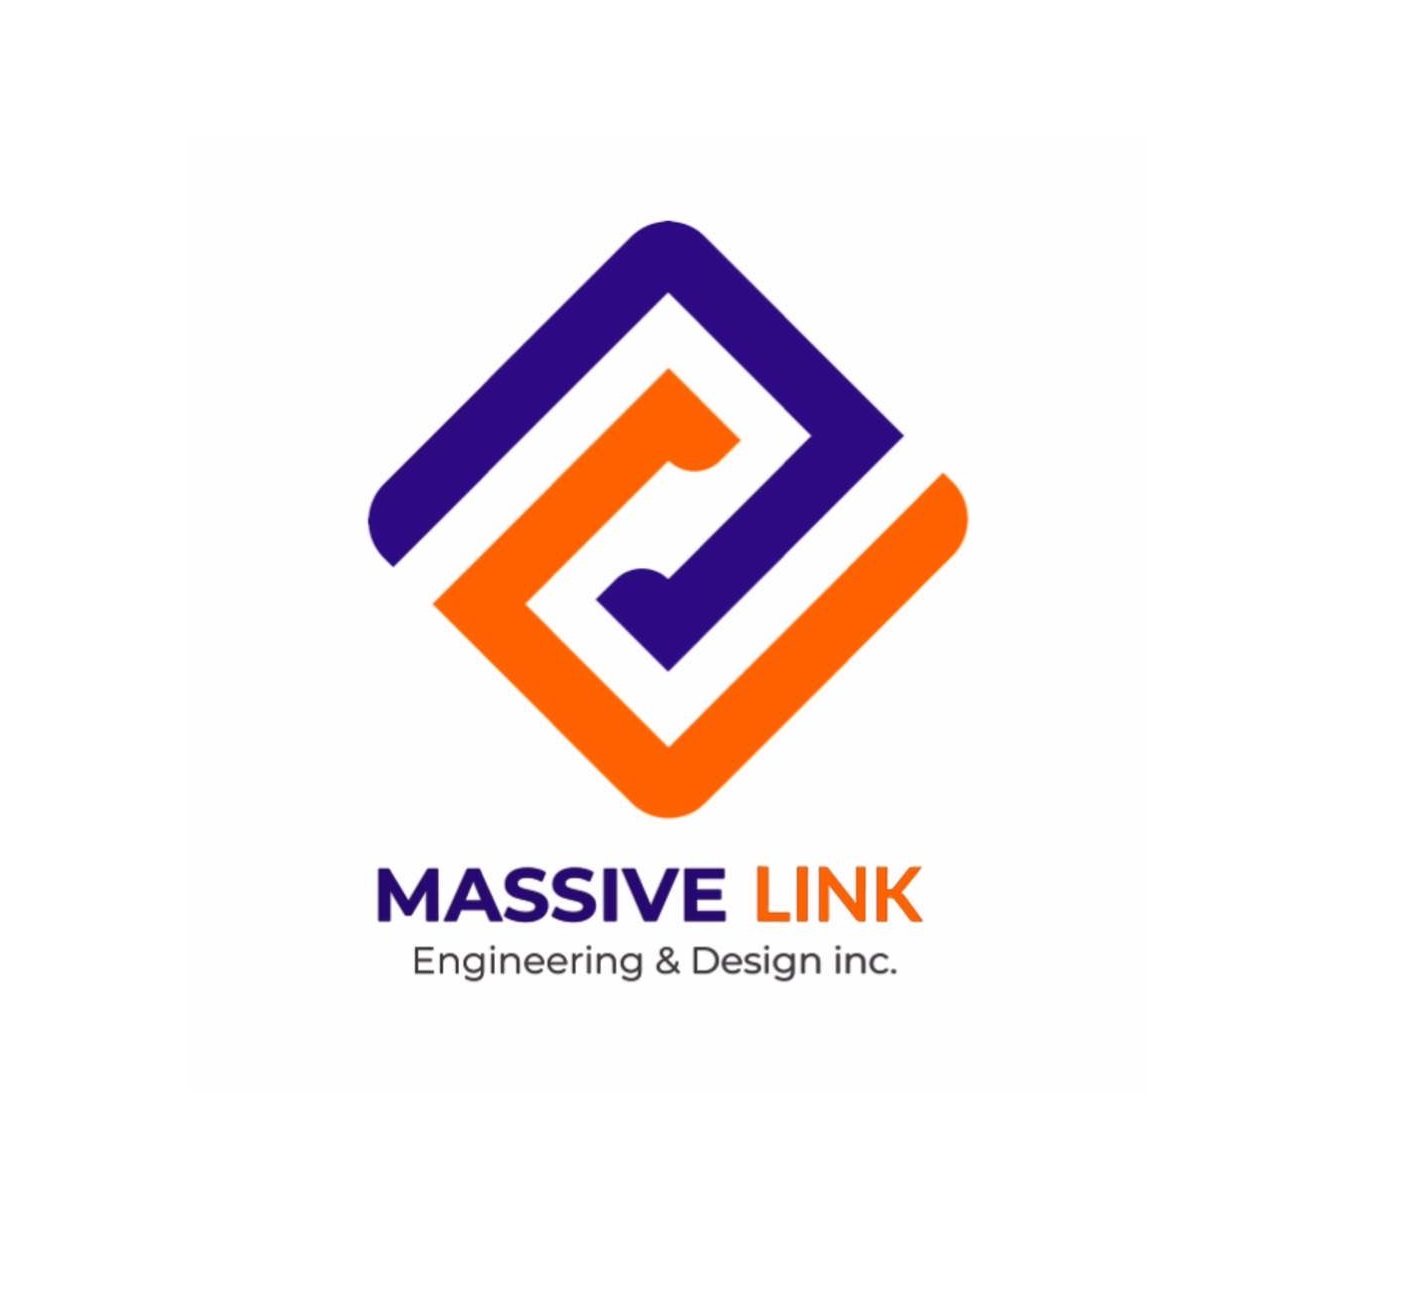 Digital Marketer Massive Link Engineering & Design inc